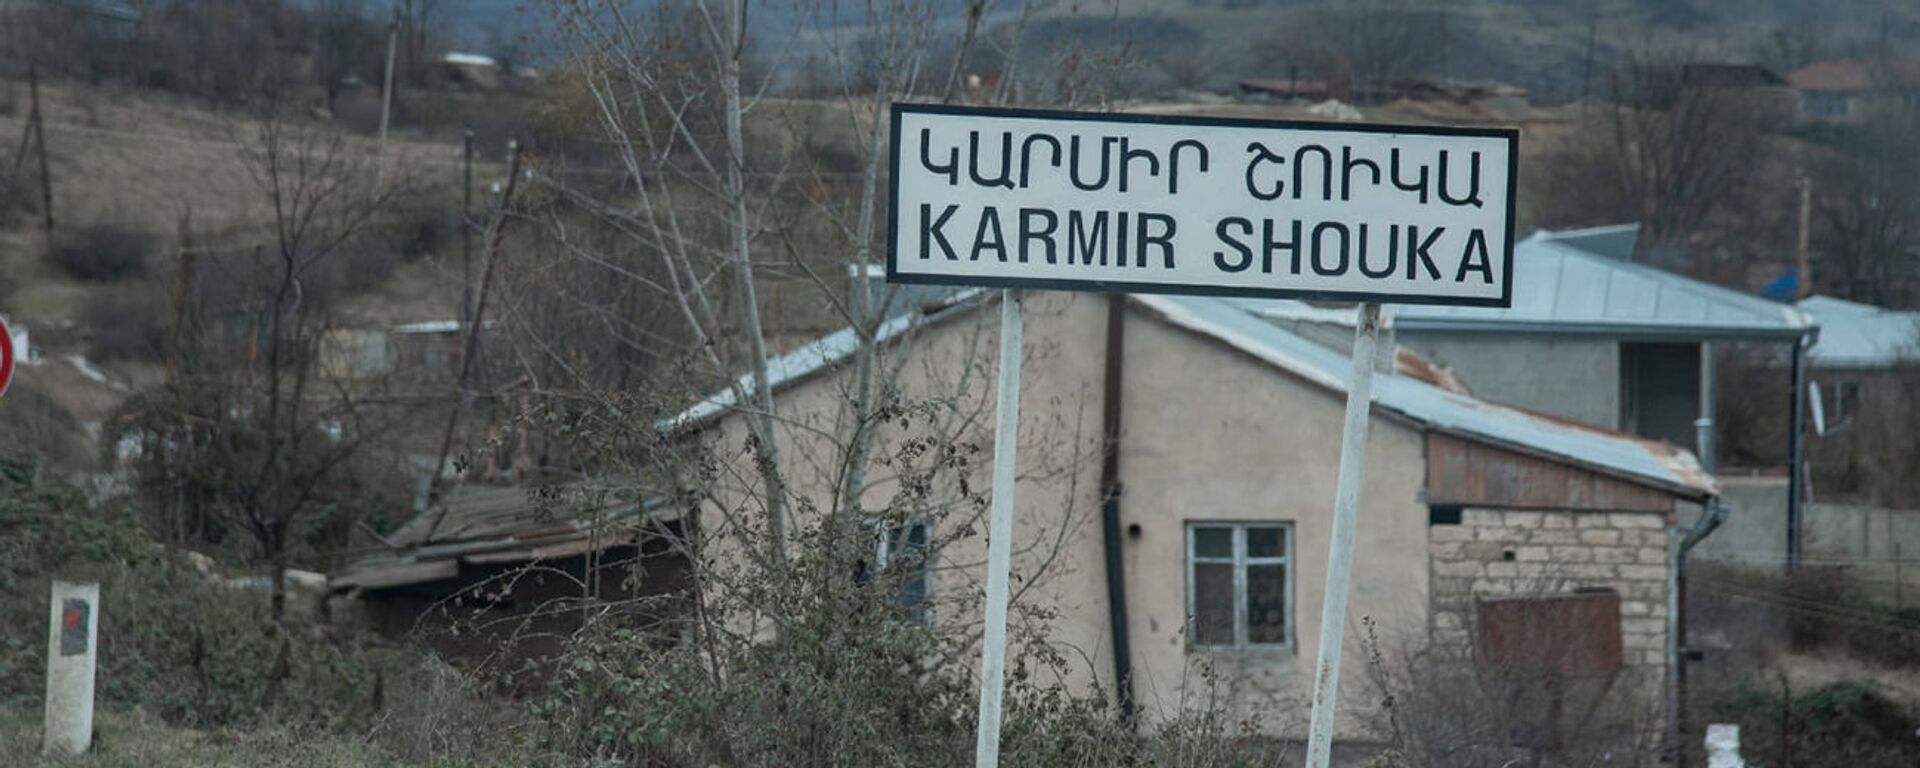 Село Кармир Шука в Карабахе - Sputnik Армения, 1920, 04.12.2021